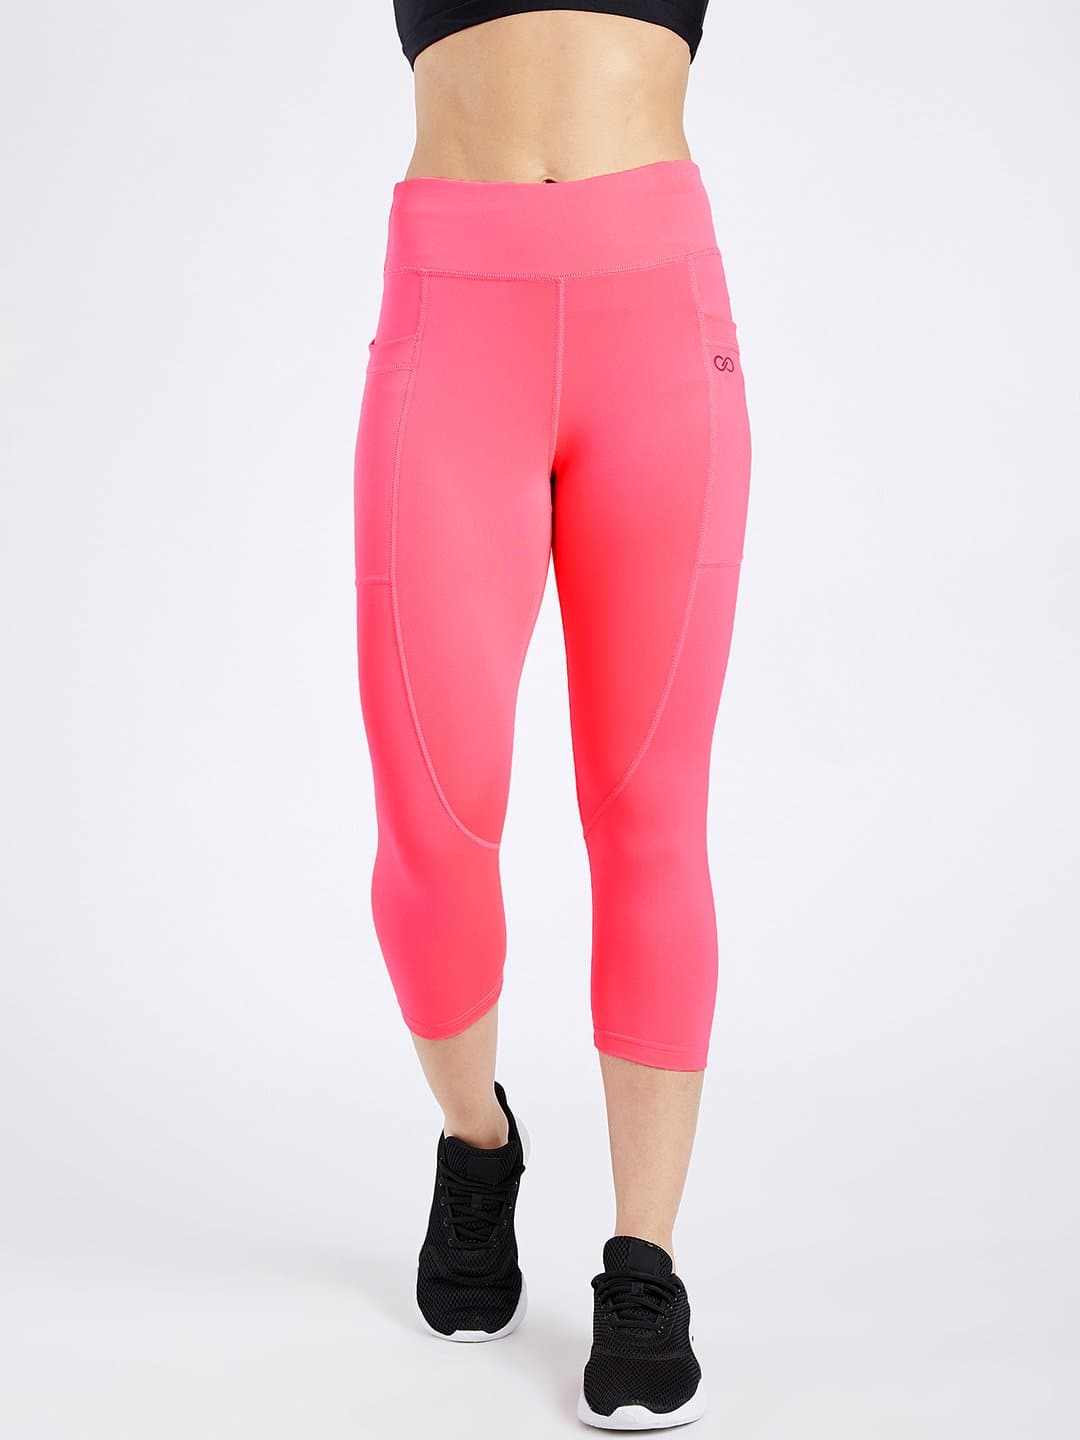 Shop Prisma Rani Pink Capri Leggings Today